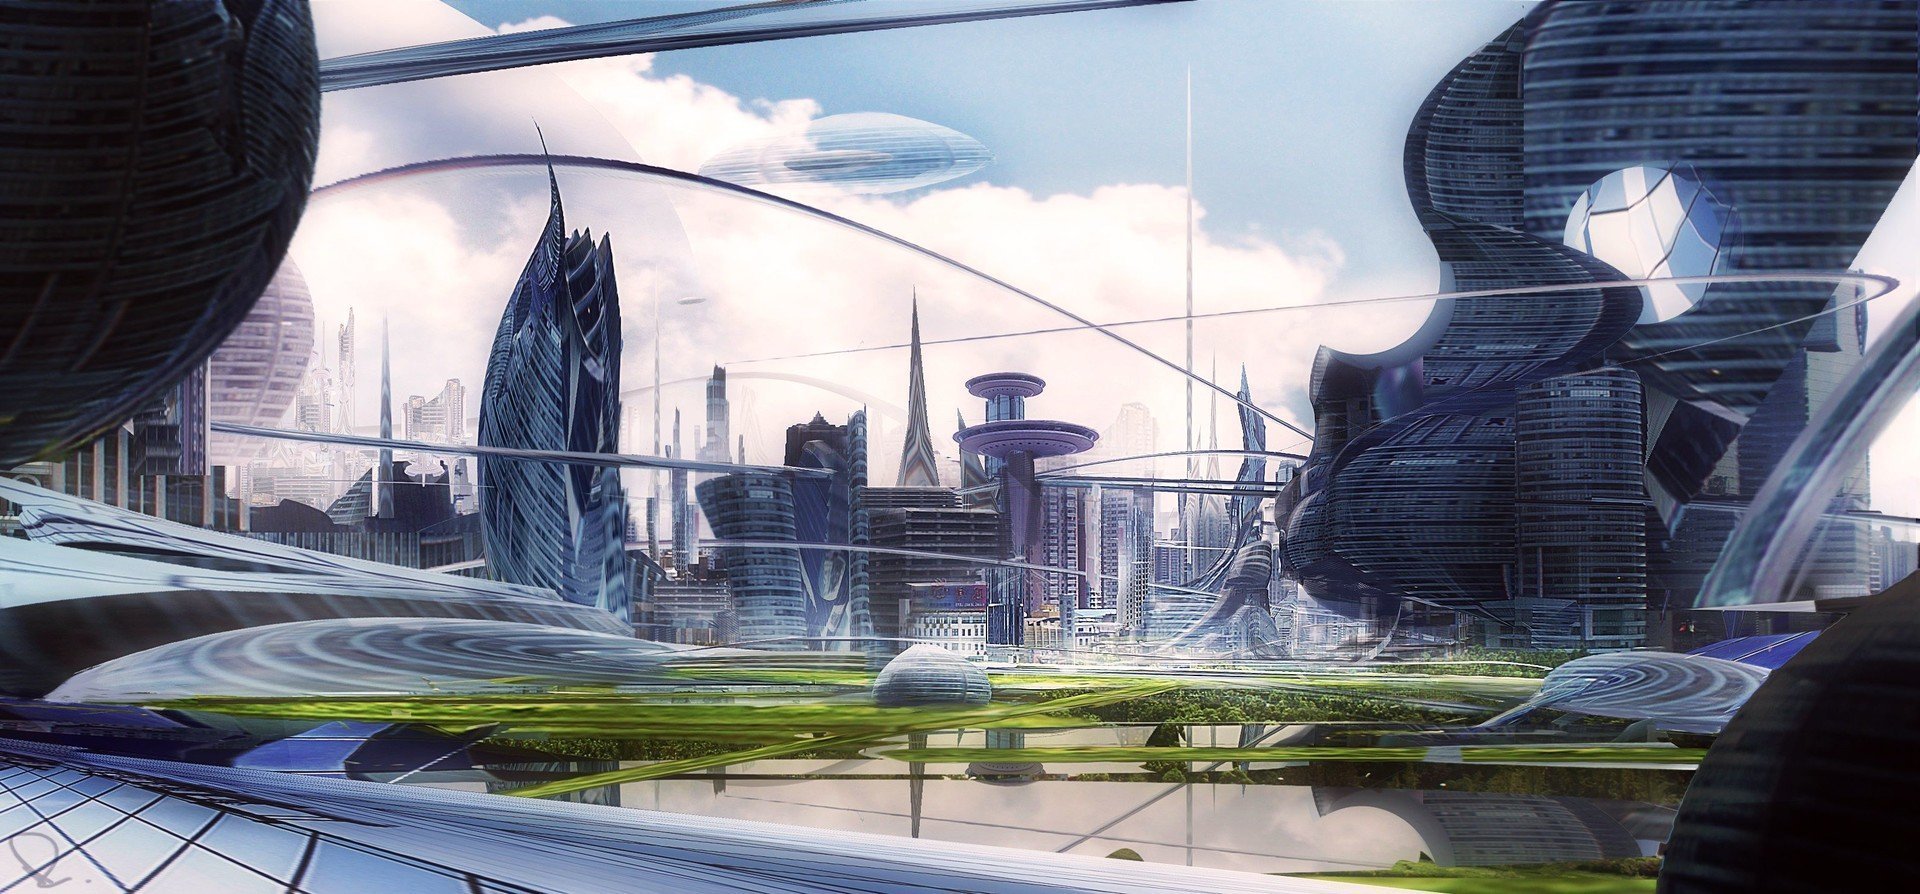 Cities of glass. Экогород будущего концепт Левиафан. Экогород Япония концепт арт. Футуризм Экогород.